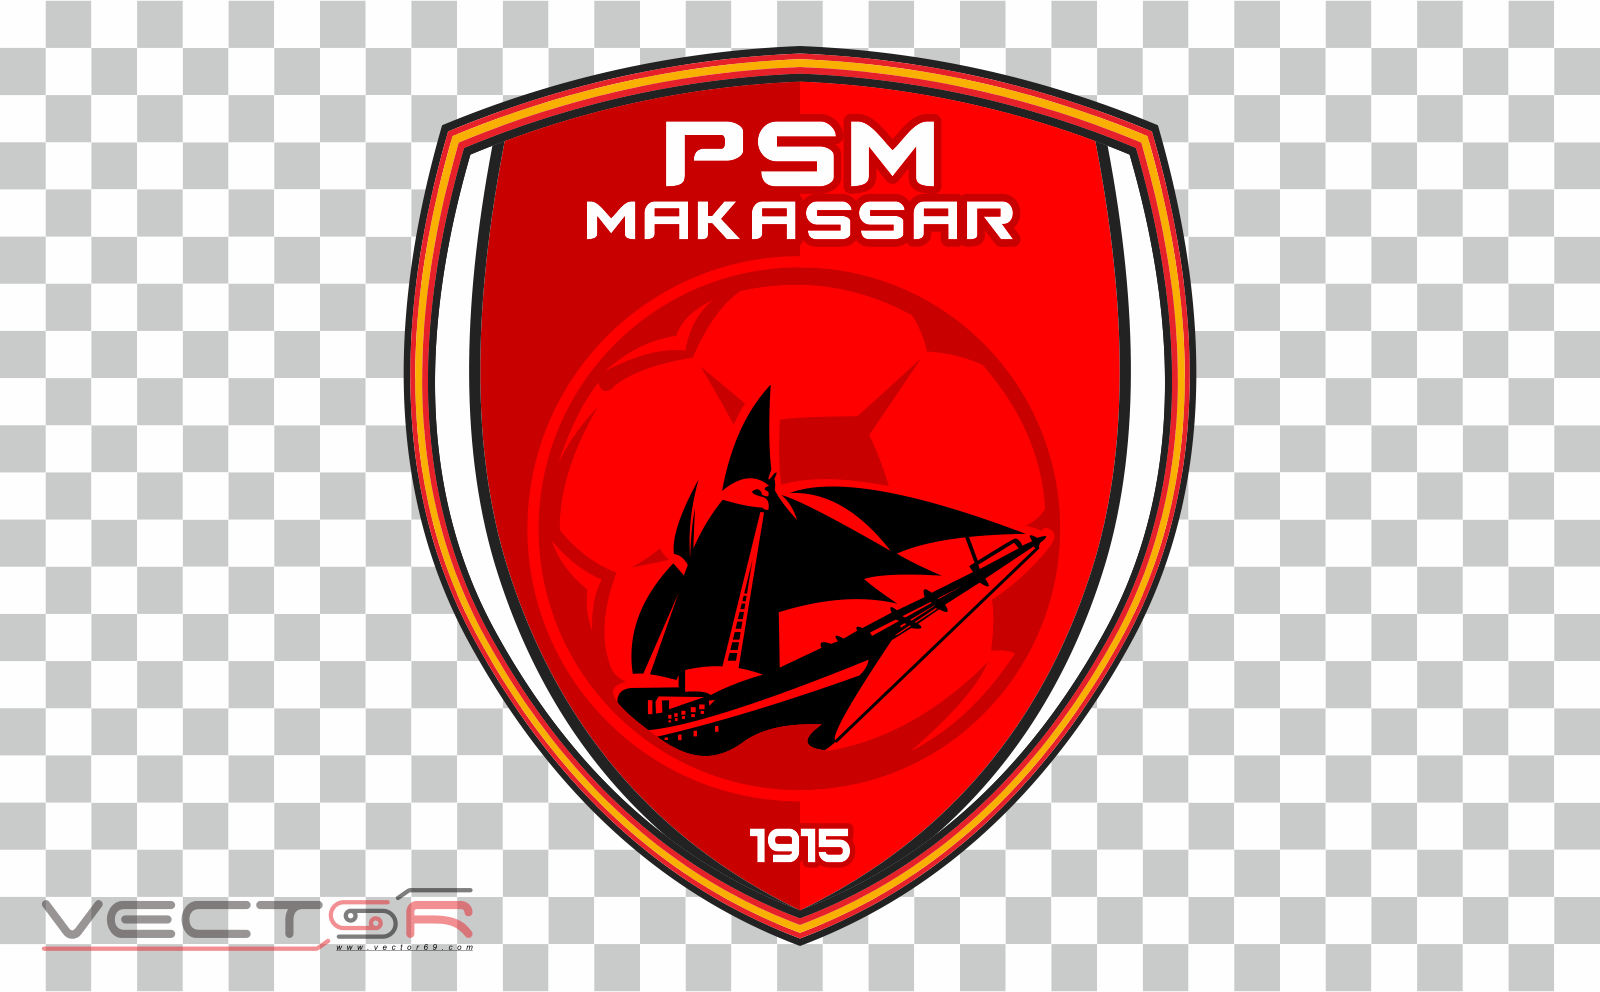 PSM Makassar (2017) Logo - Download .PNG (Portable Network Graphics) Transparent Images